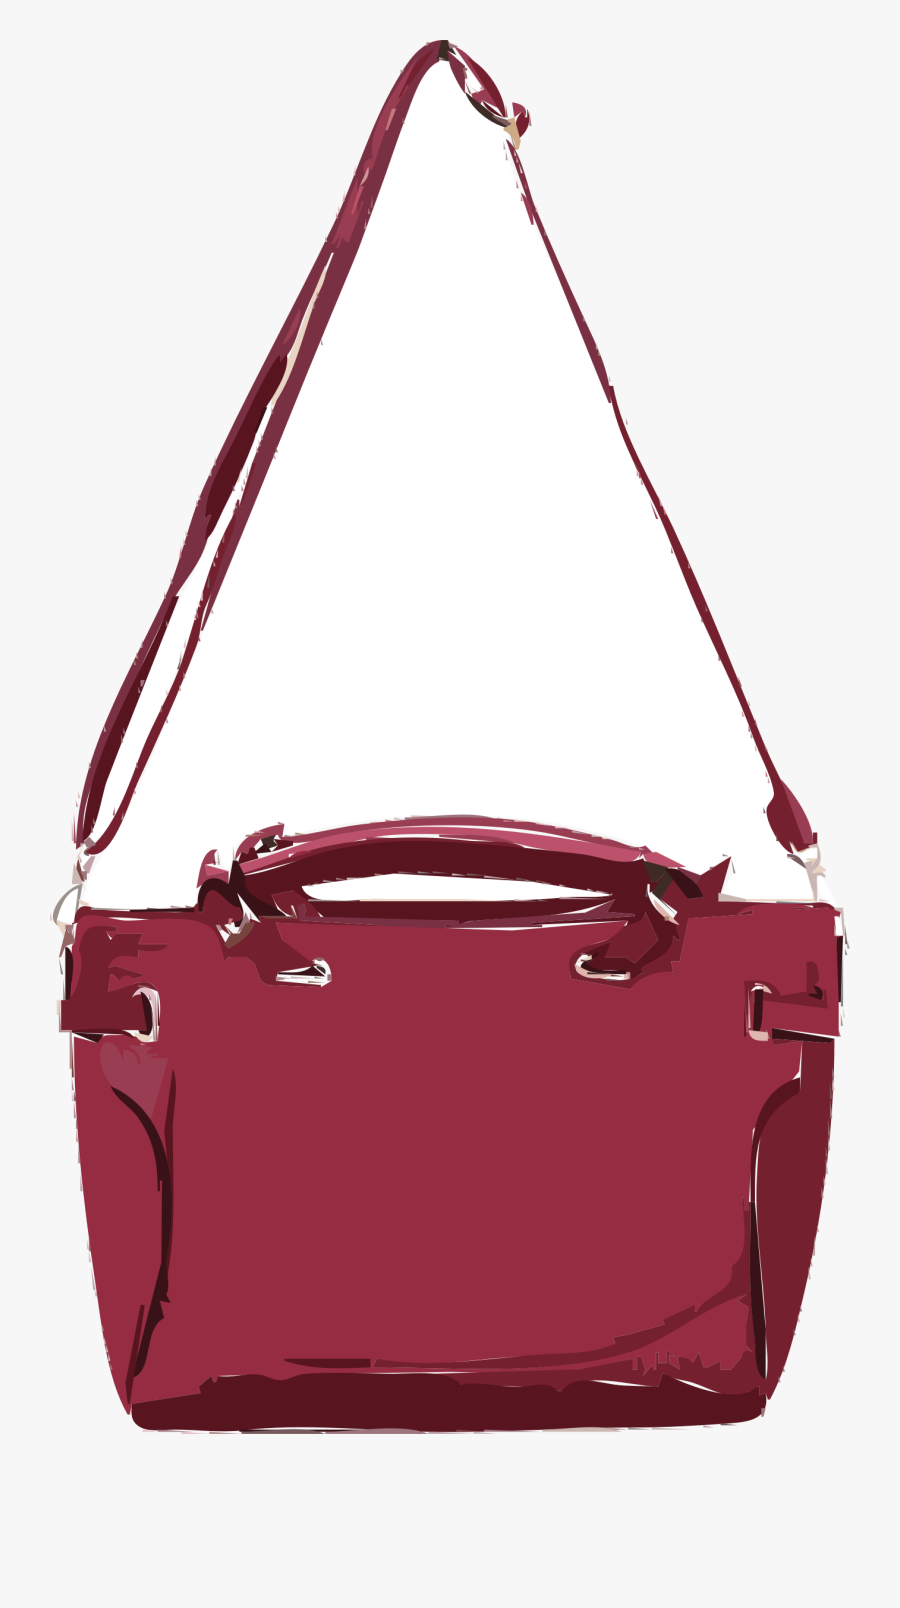 Handbag Computer Icons Leather Clothing Accessories - Handbag, Transparent Clipart